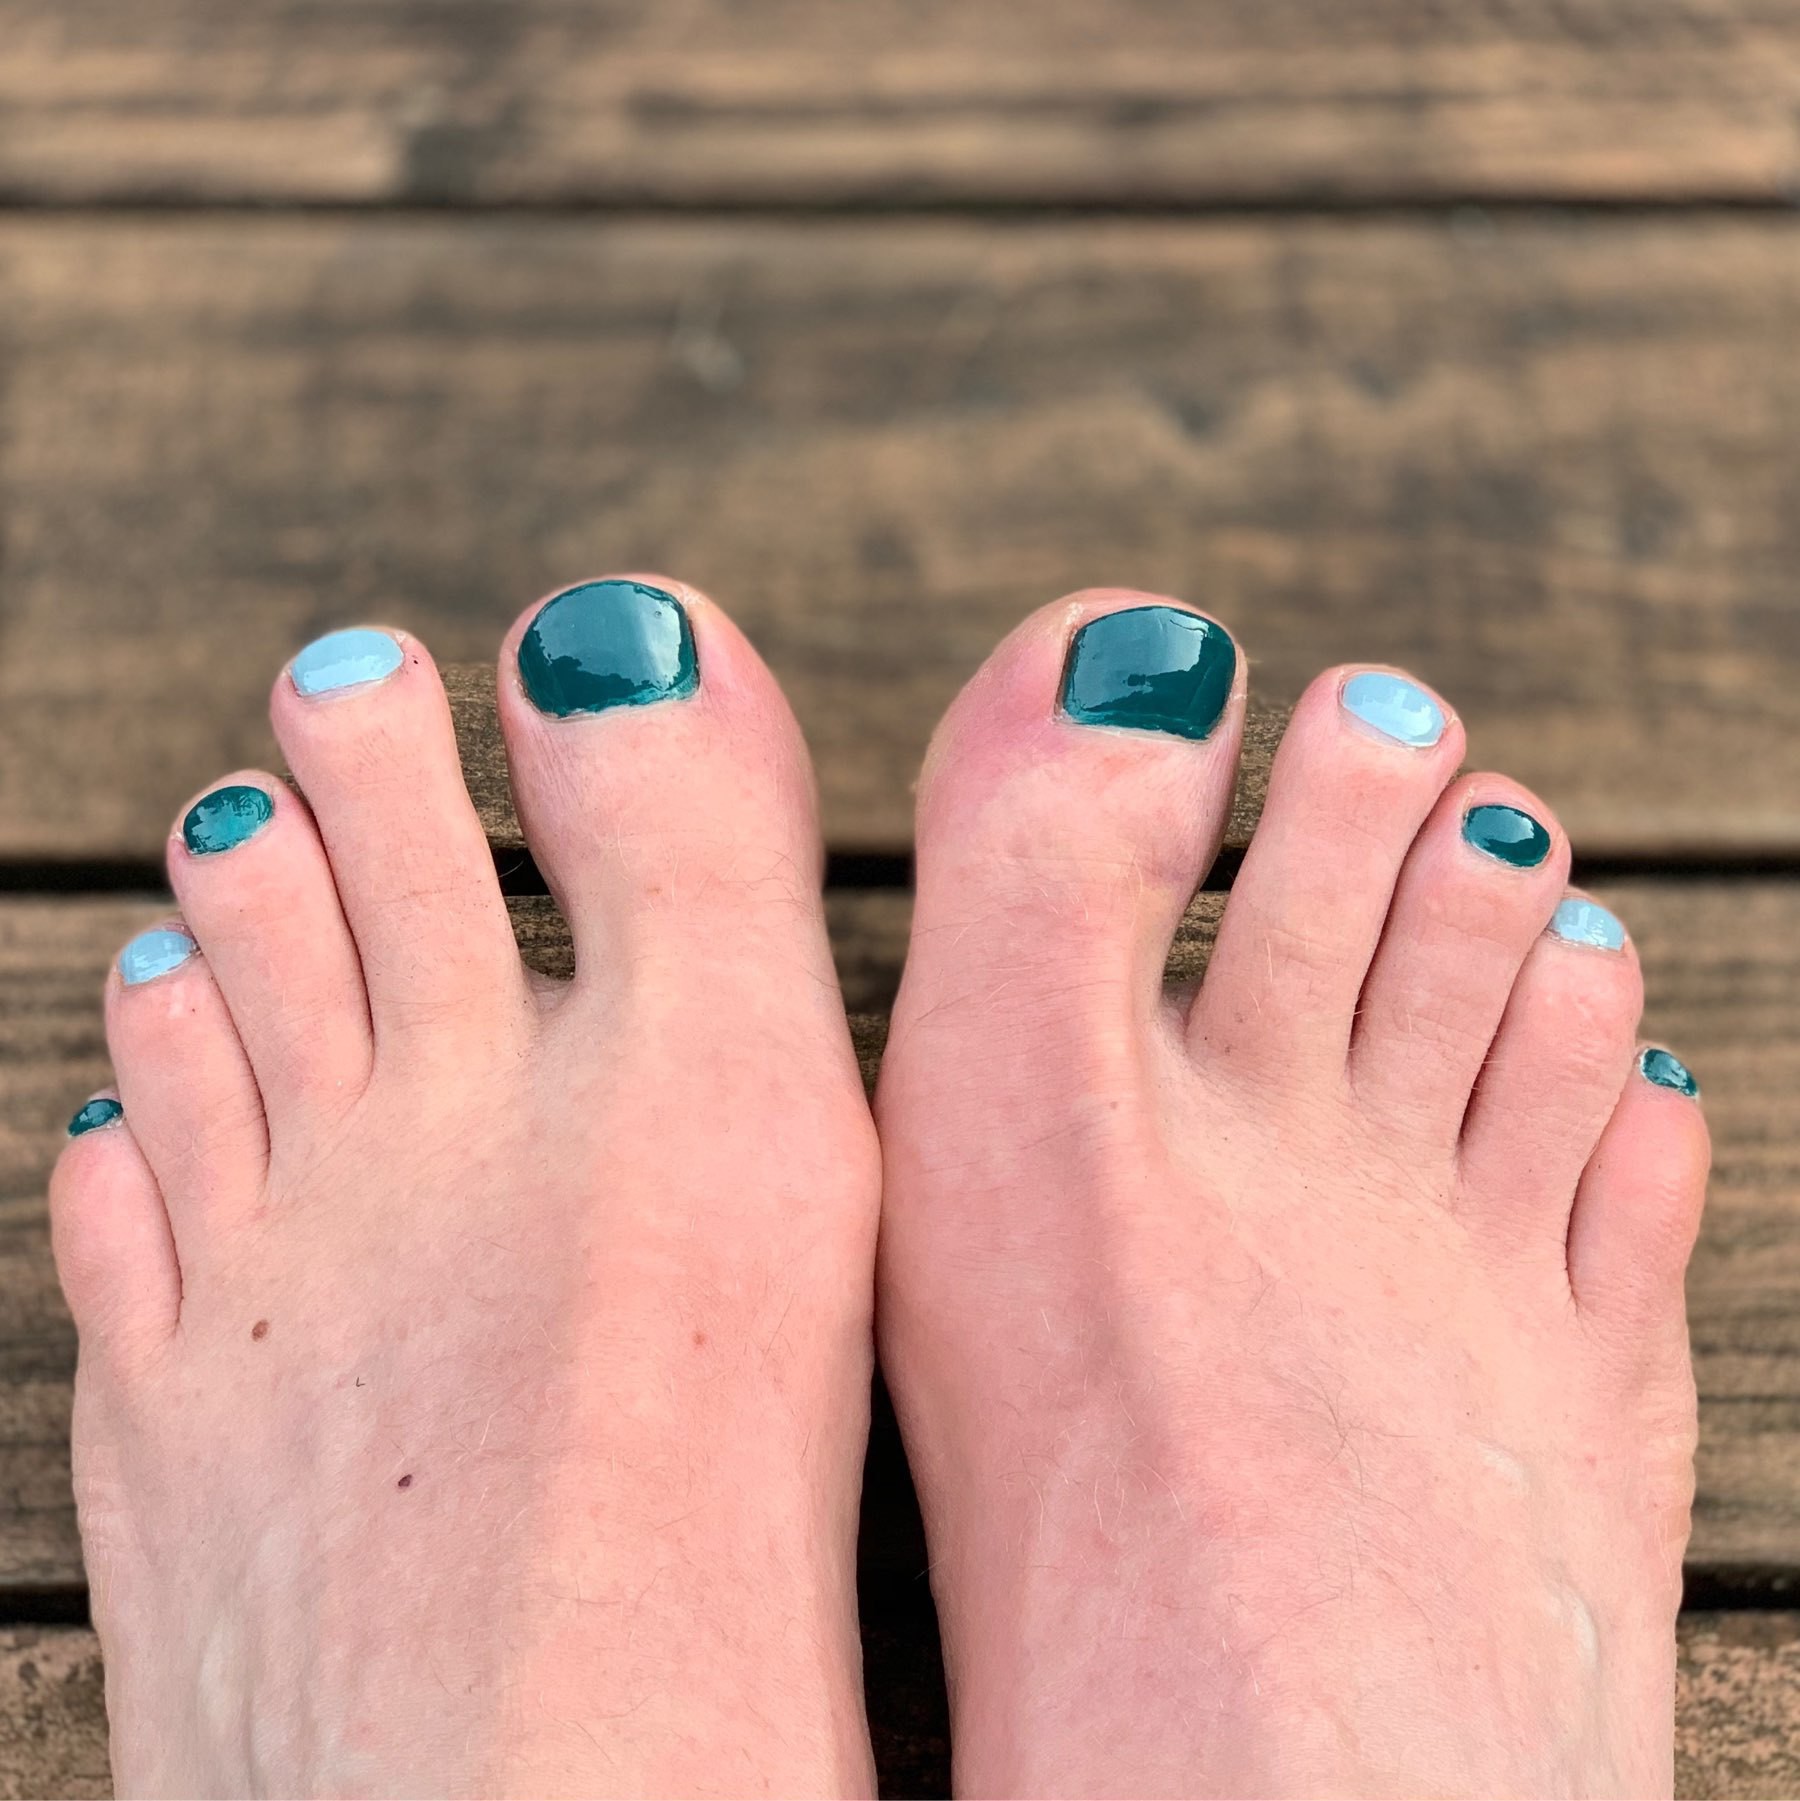 My painted toenails